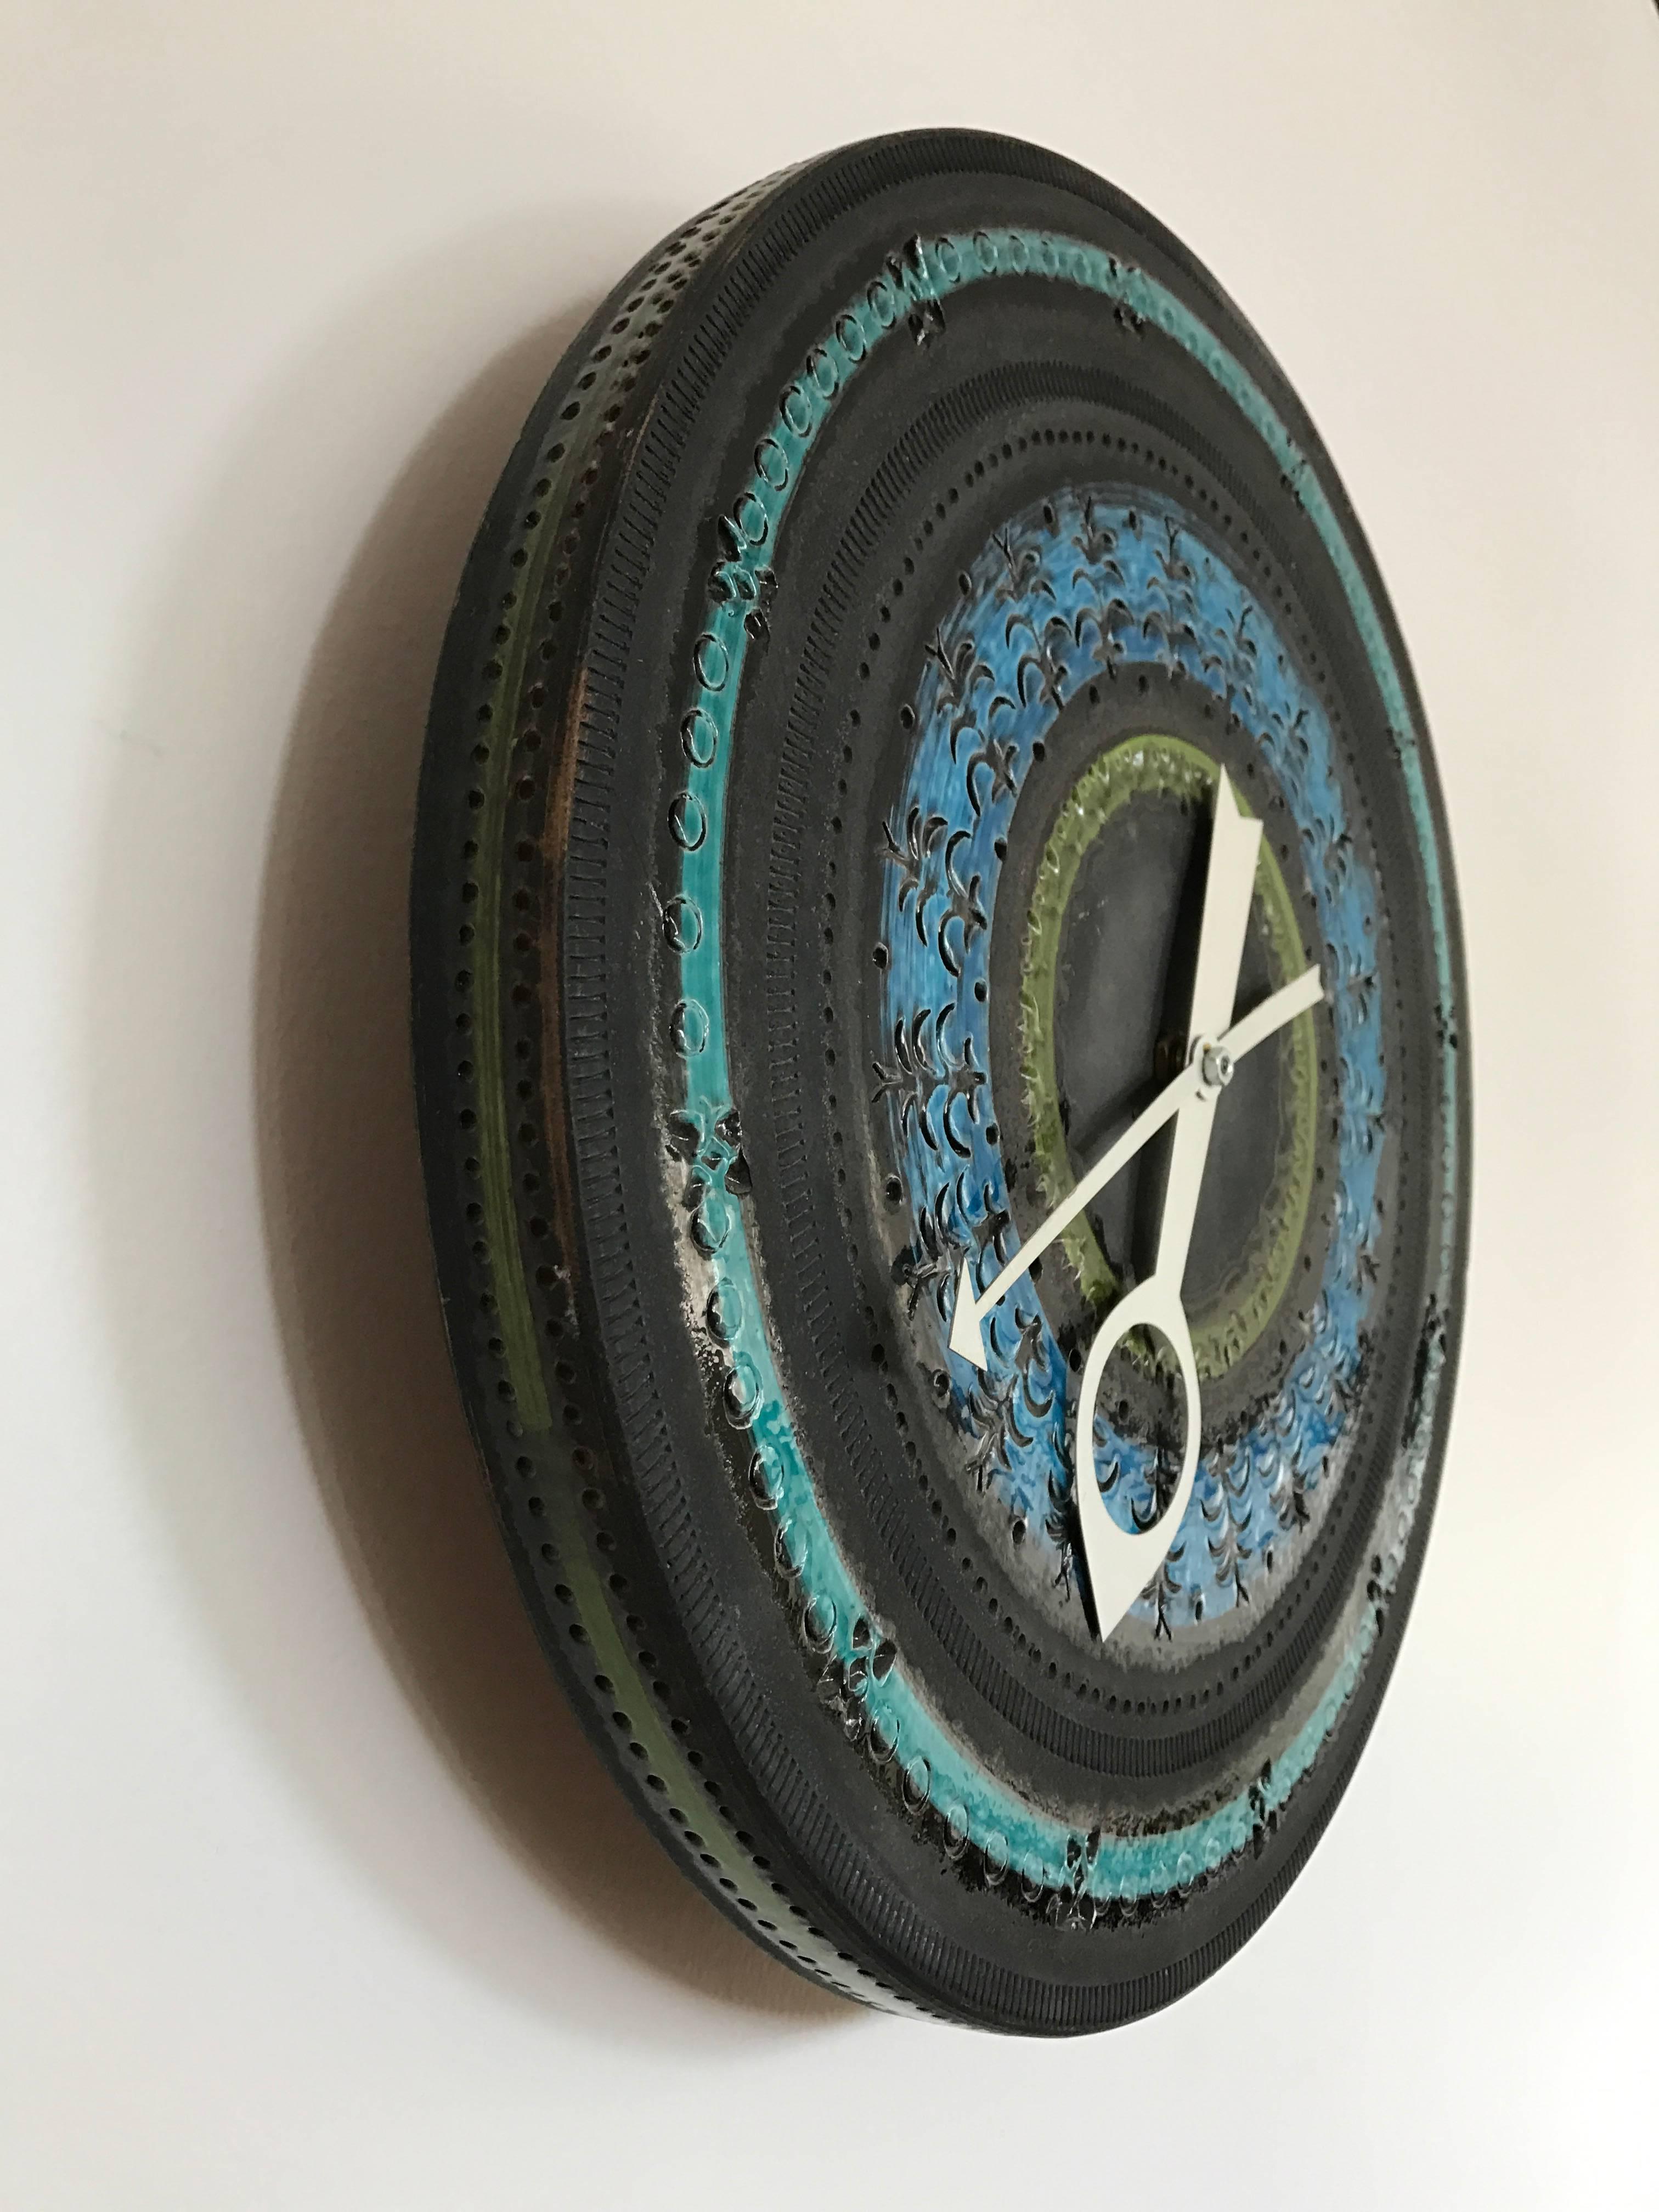 Glazed Meridian Clock for Raymor Designed by George Nelson